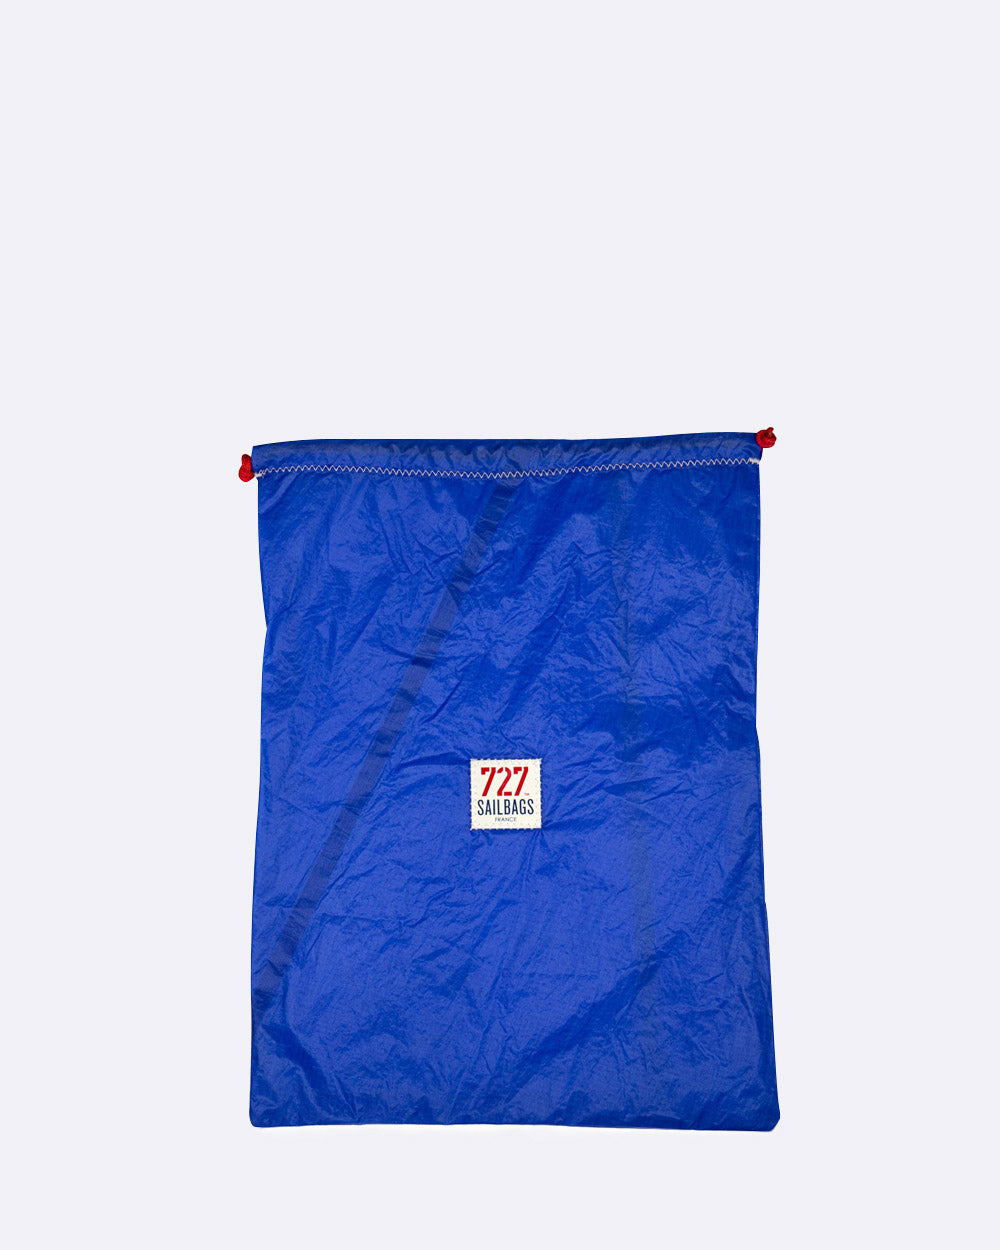 Strandbeutel "Spi Bag" by 727 Sailbags / Segeltuch blau